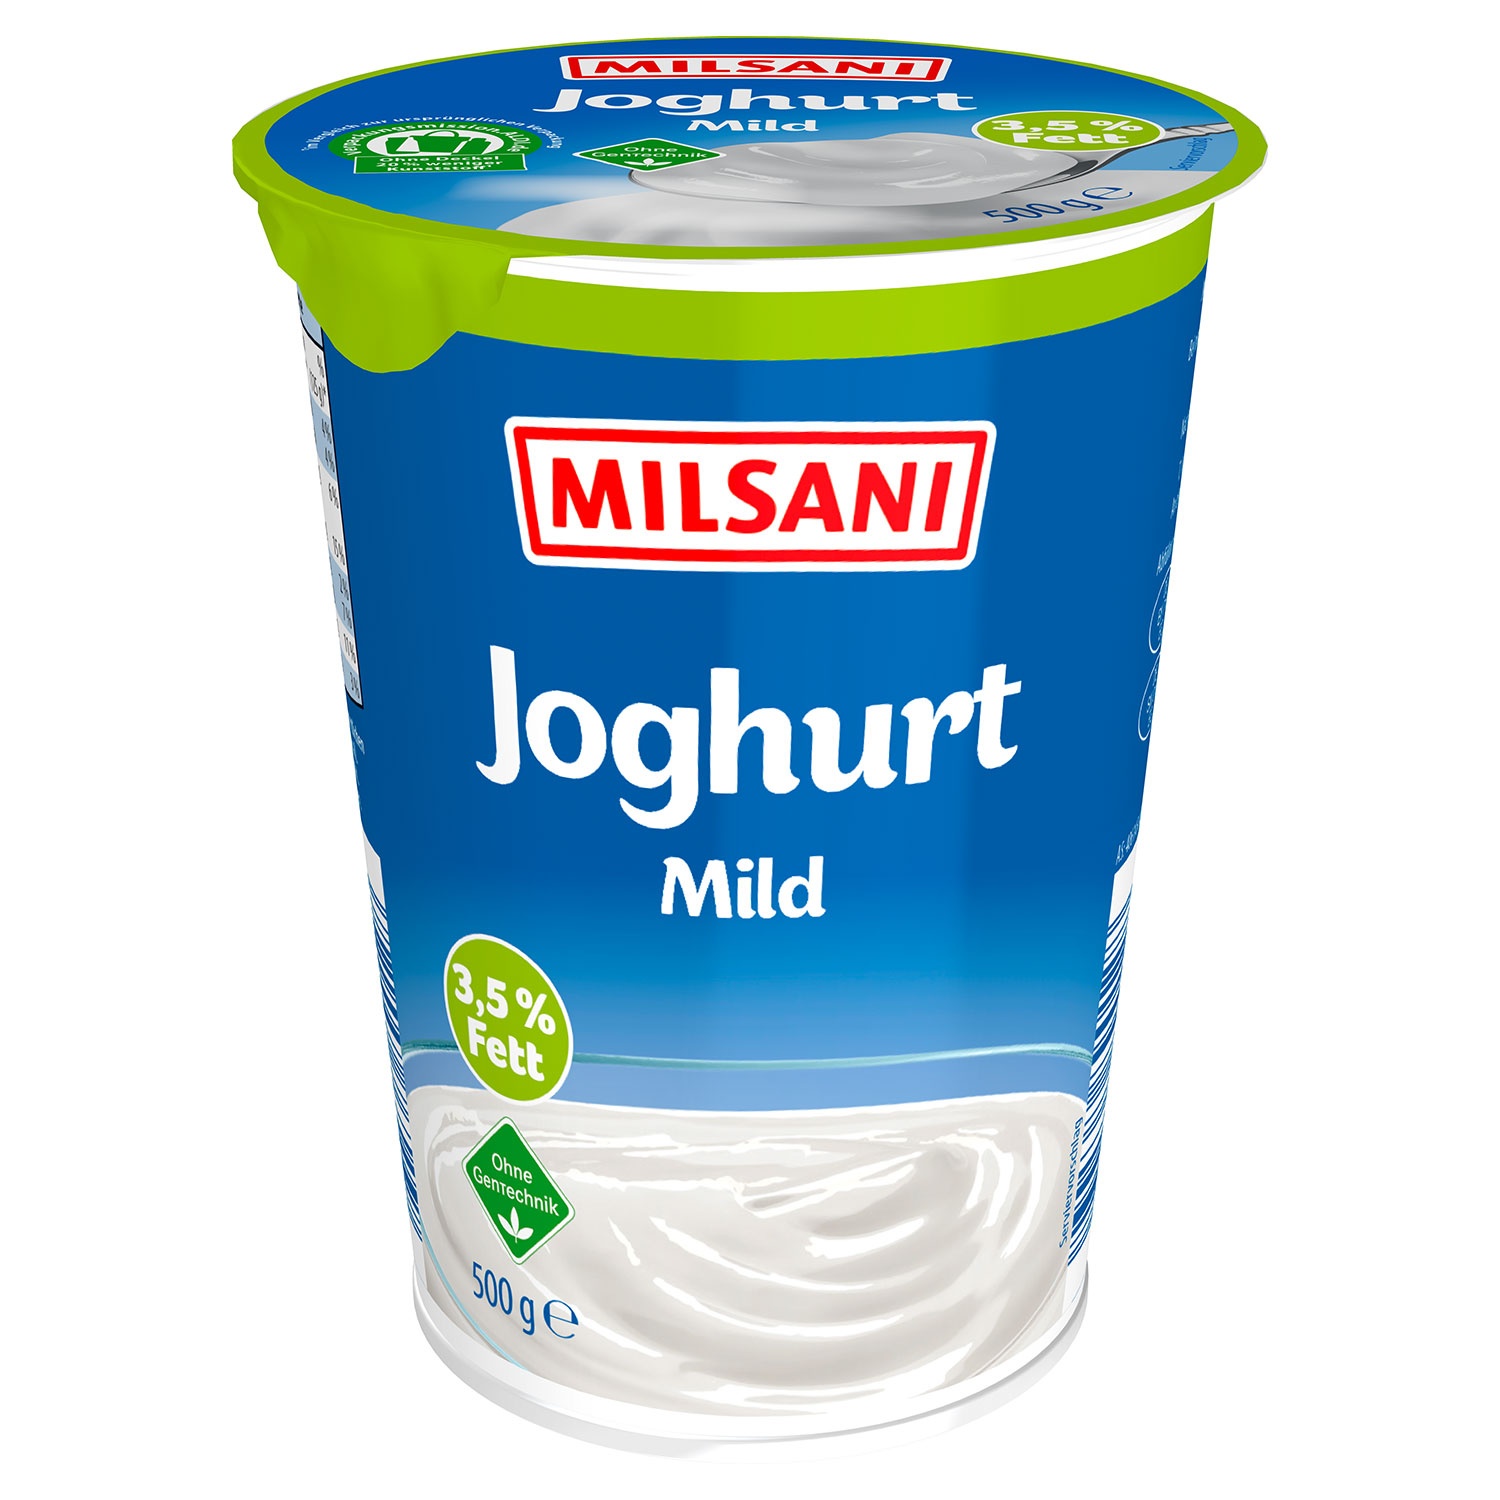 MILSANI Joghurt mild 3,5 % 500 g